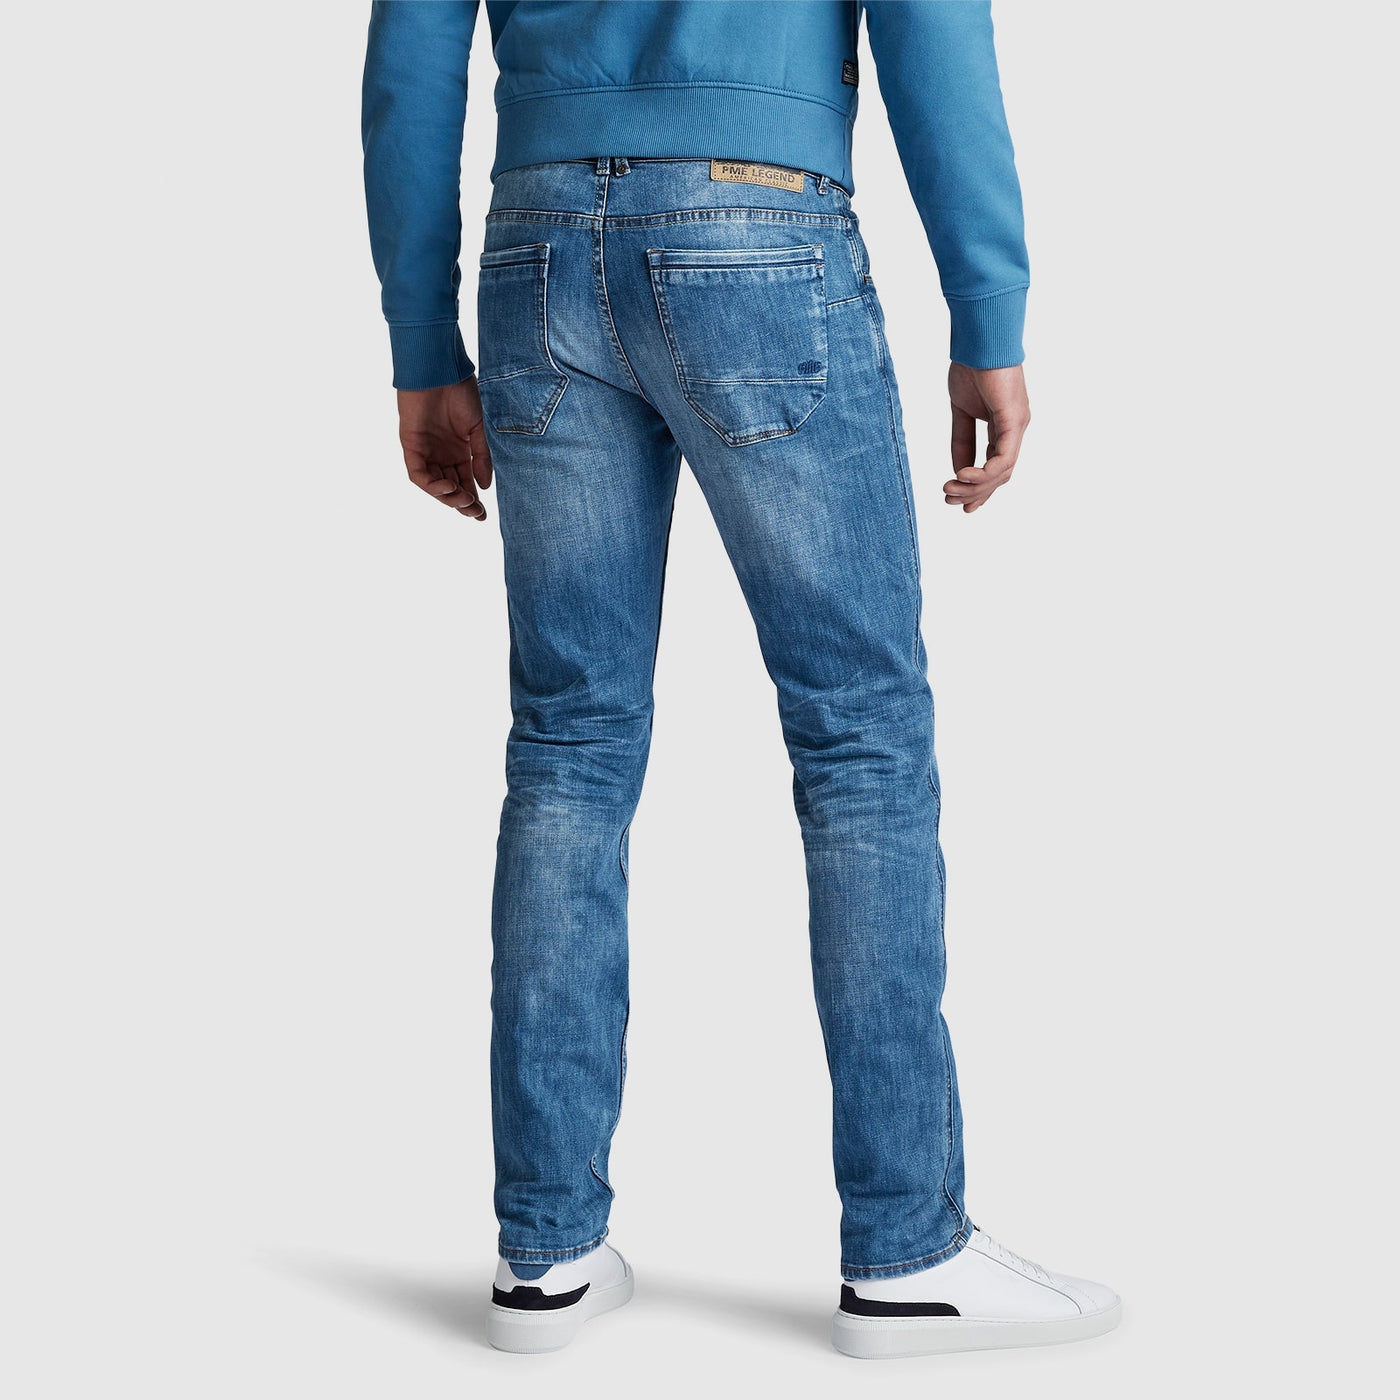 jeans stretch slub denim PME Legend jeans fbs – Versteegh Jeans